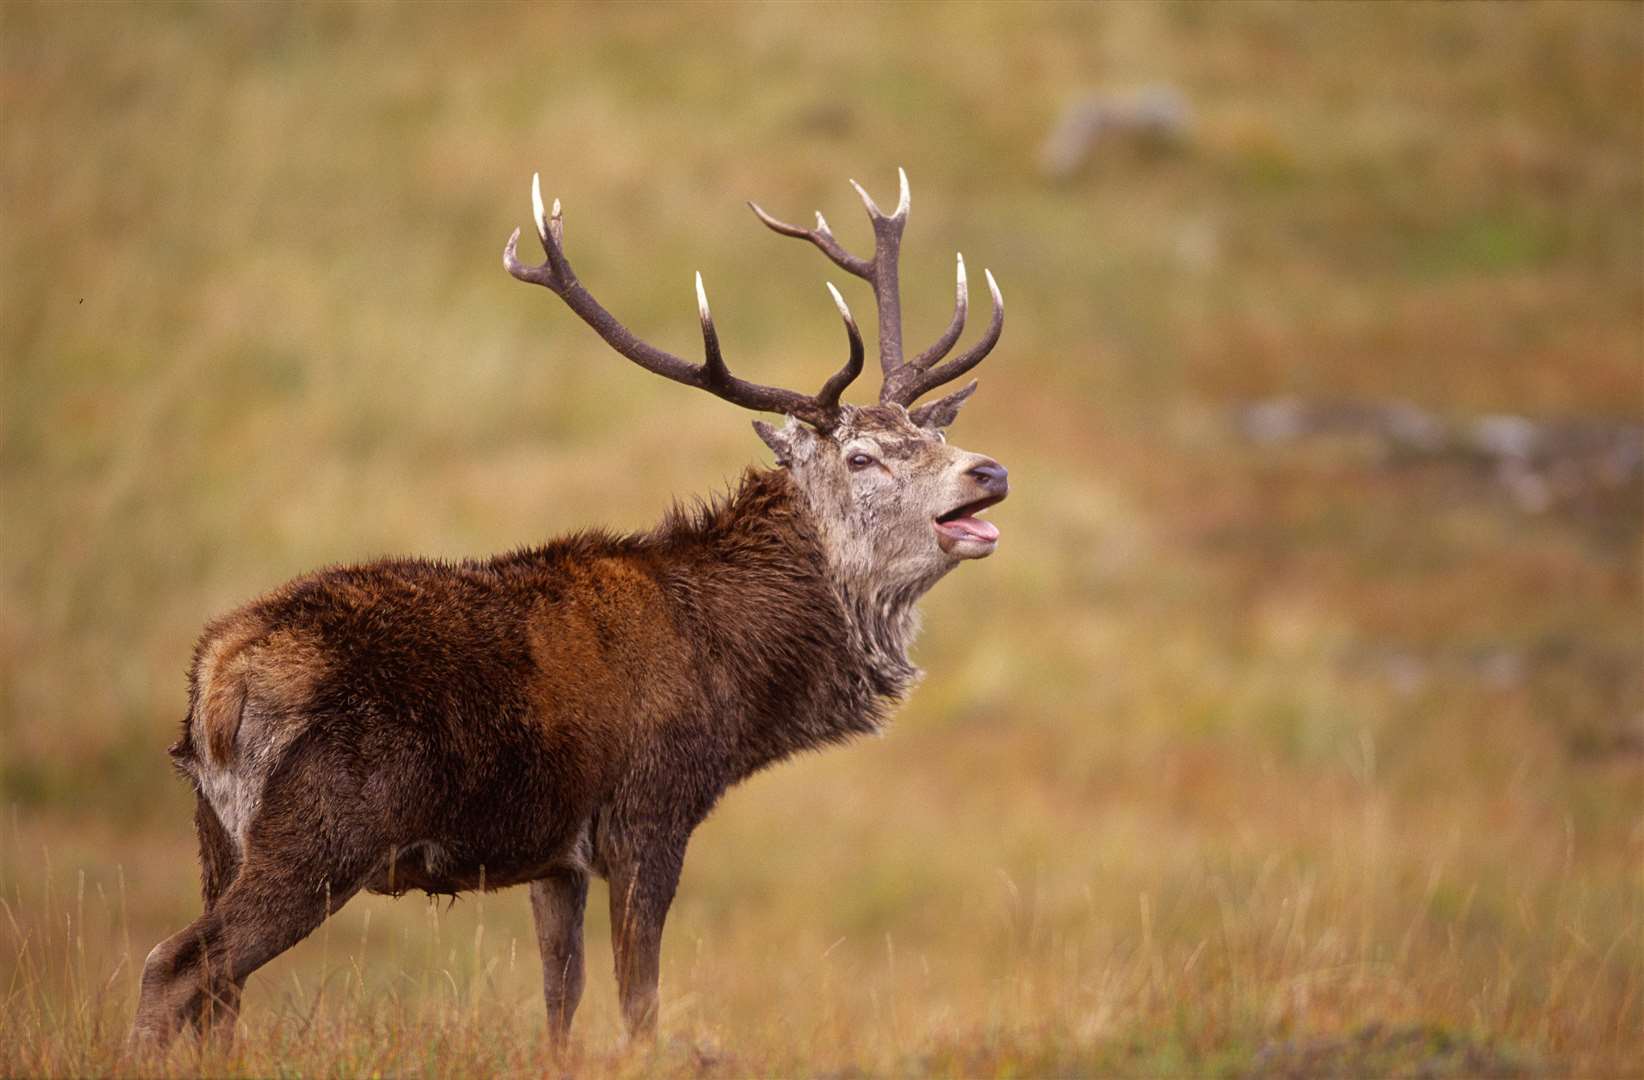 Deer stalking advice website can help hill walkers follow Scottish ...